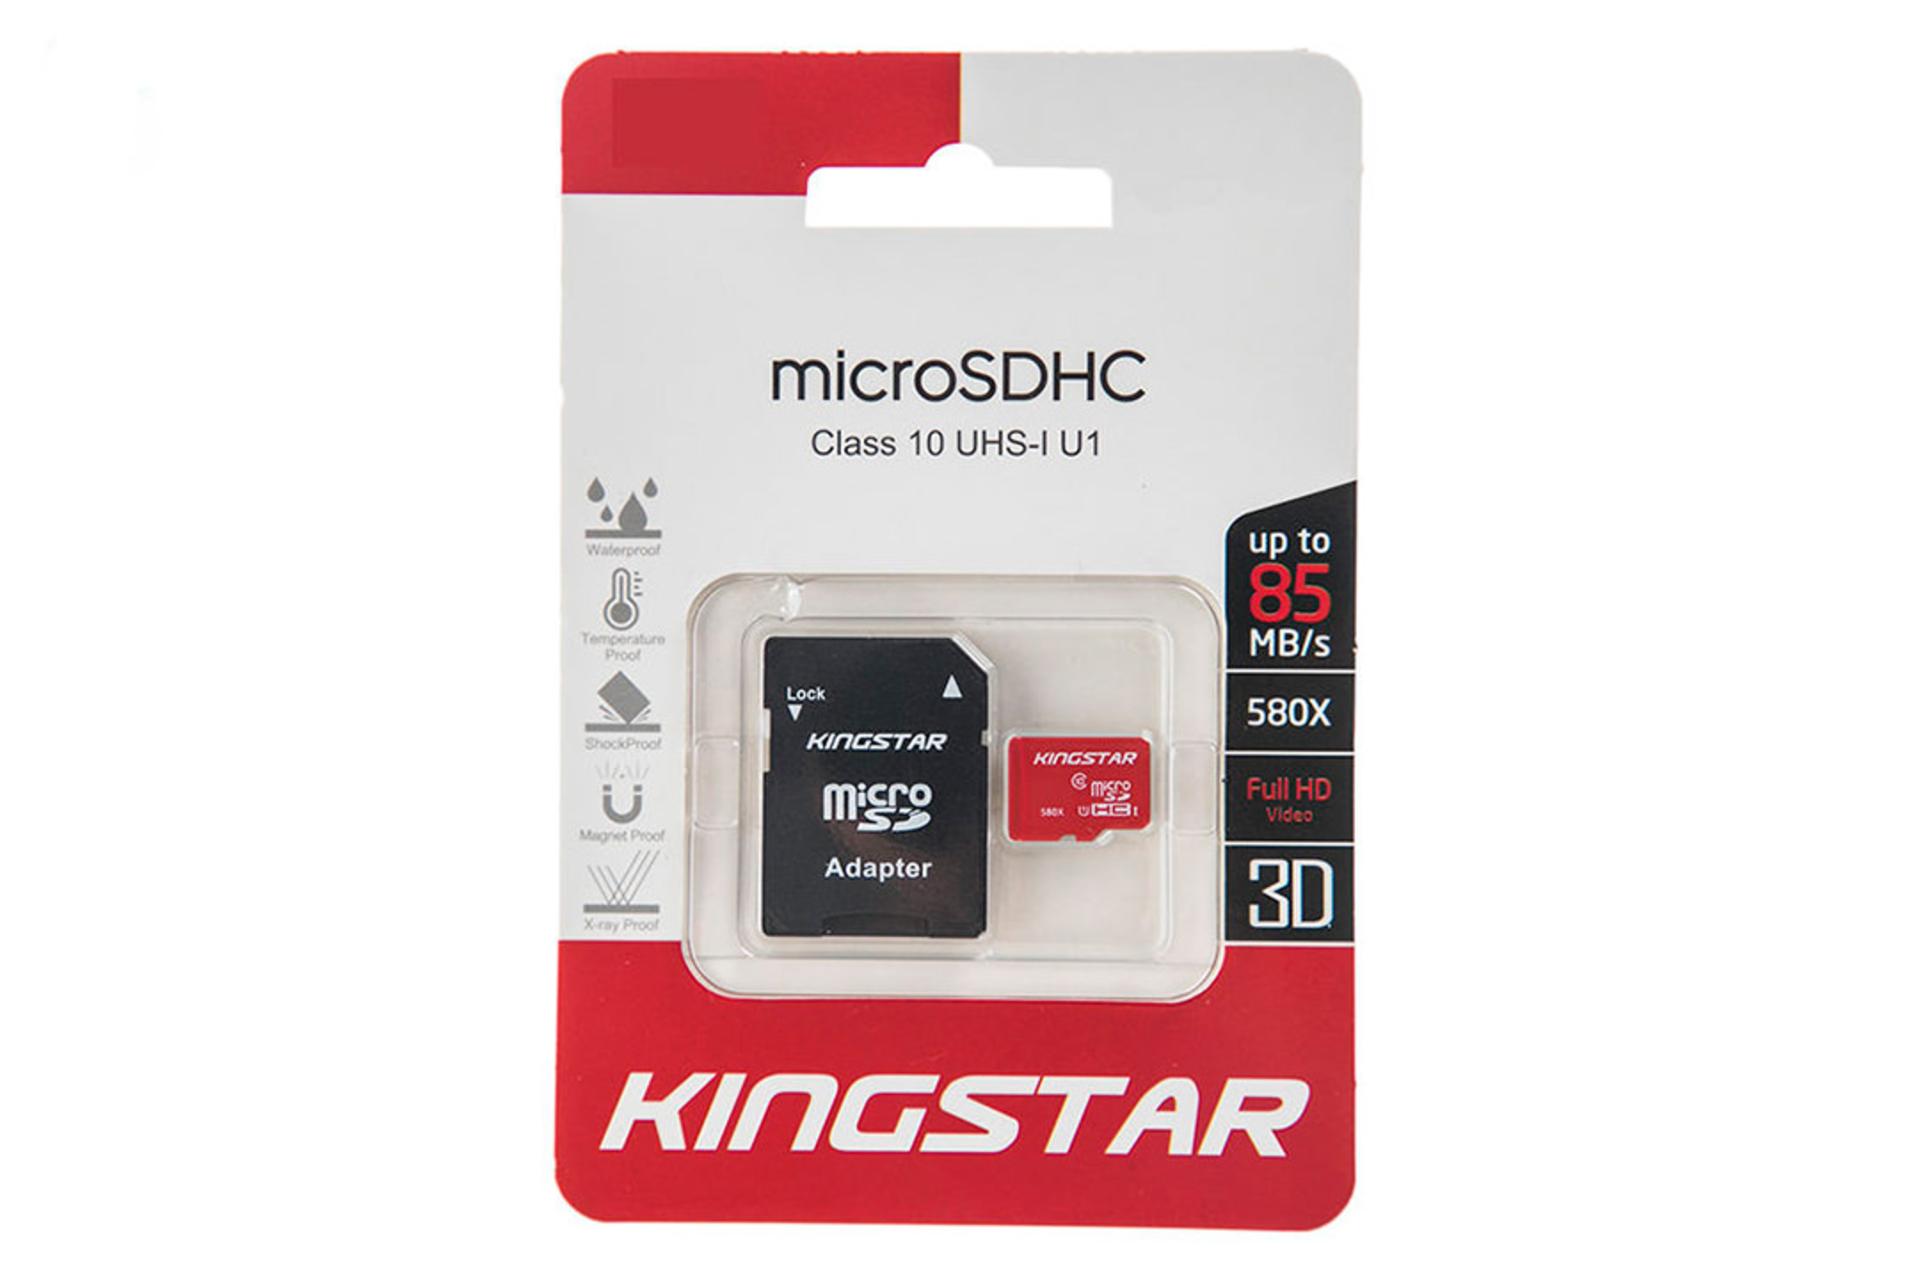 Kingstar microSDHC Class 10 UHS-I U1 16GB